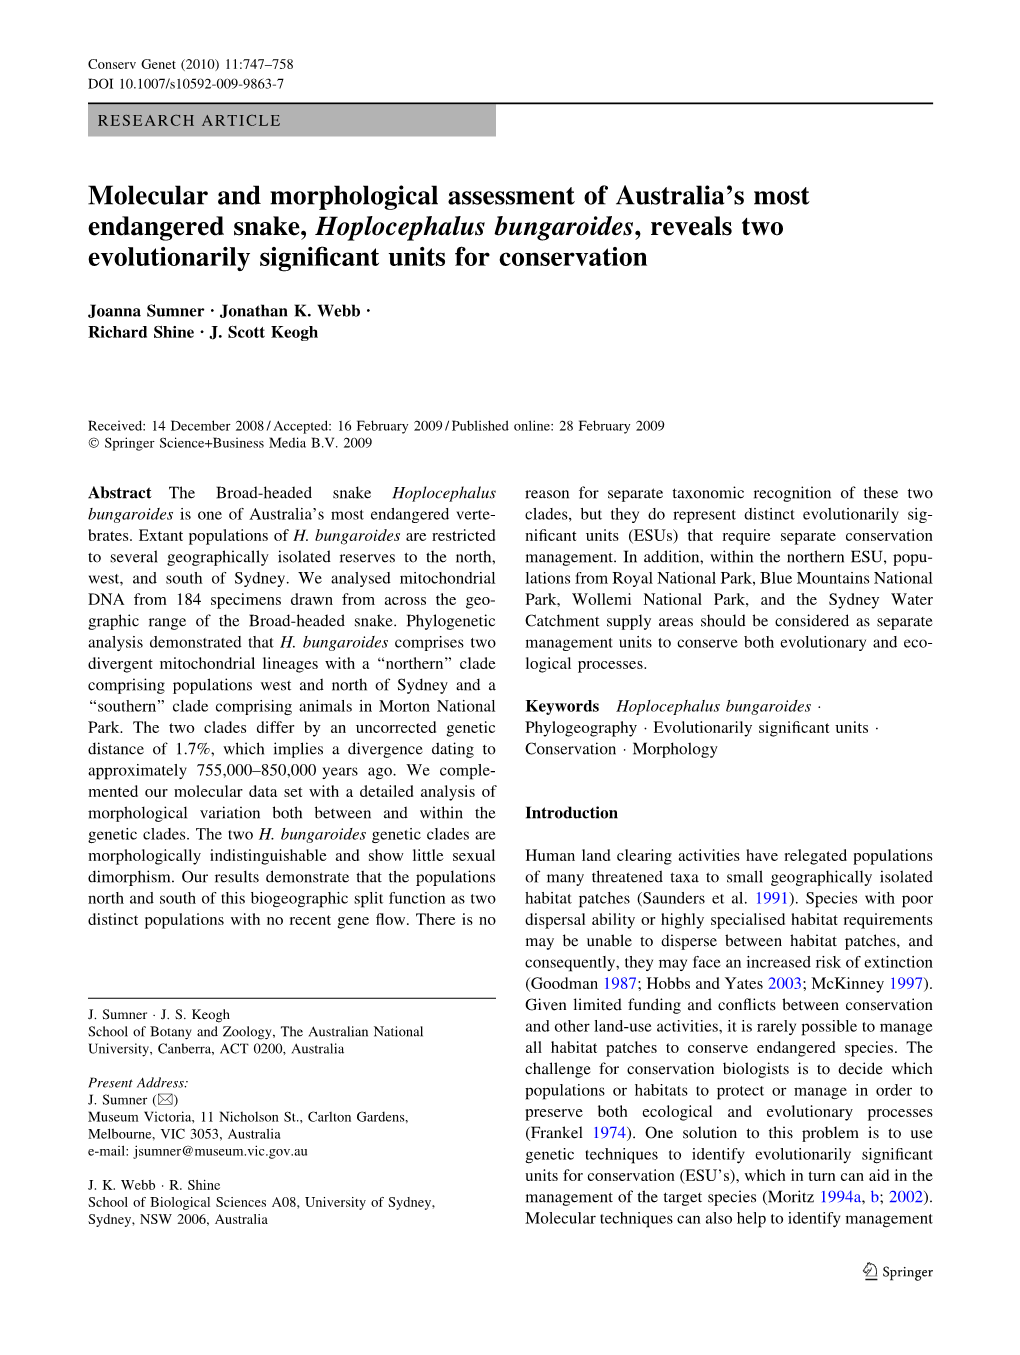 Molecular and Morphological Assessment of Australia's Most